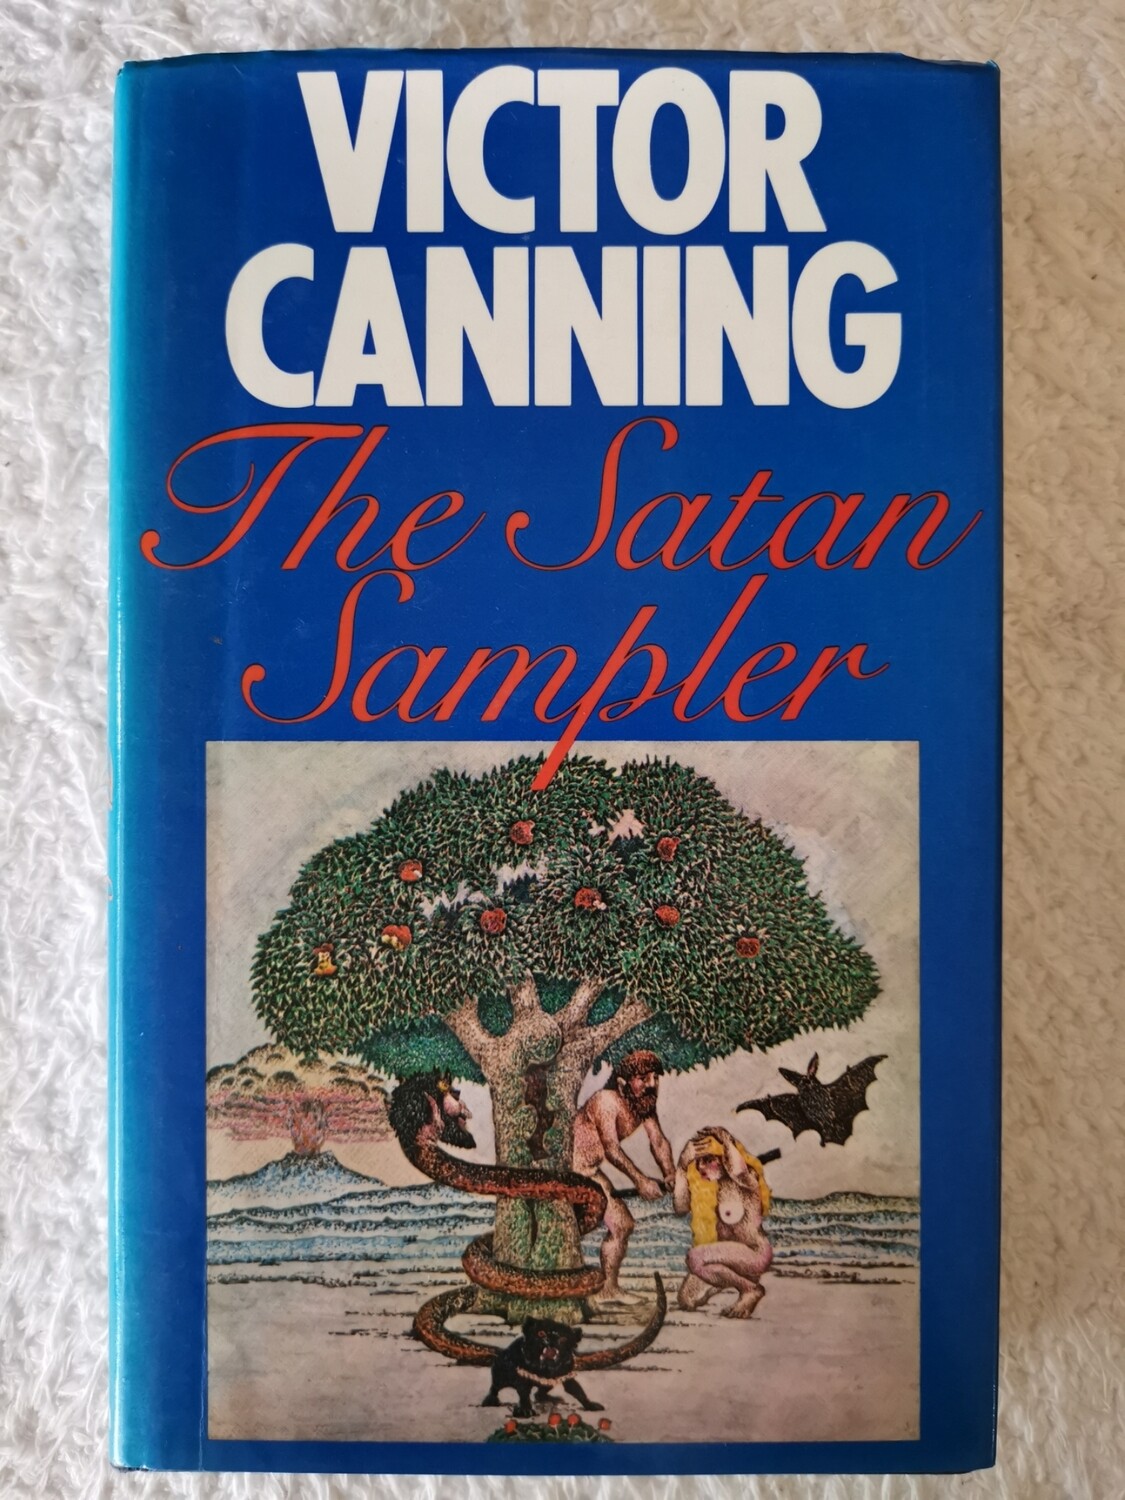 The Satan sampler, Victor Canning